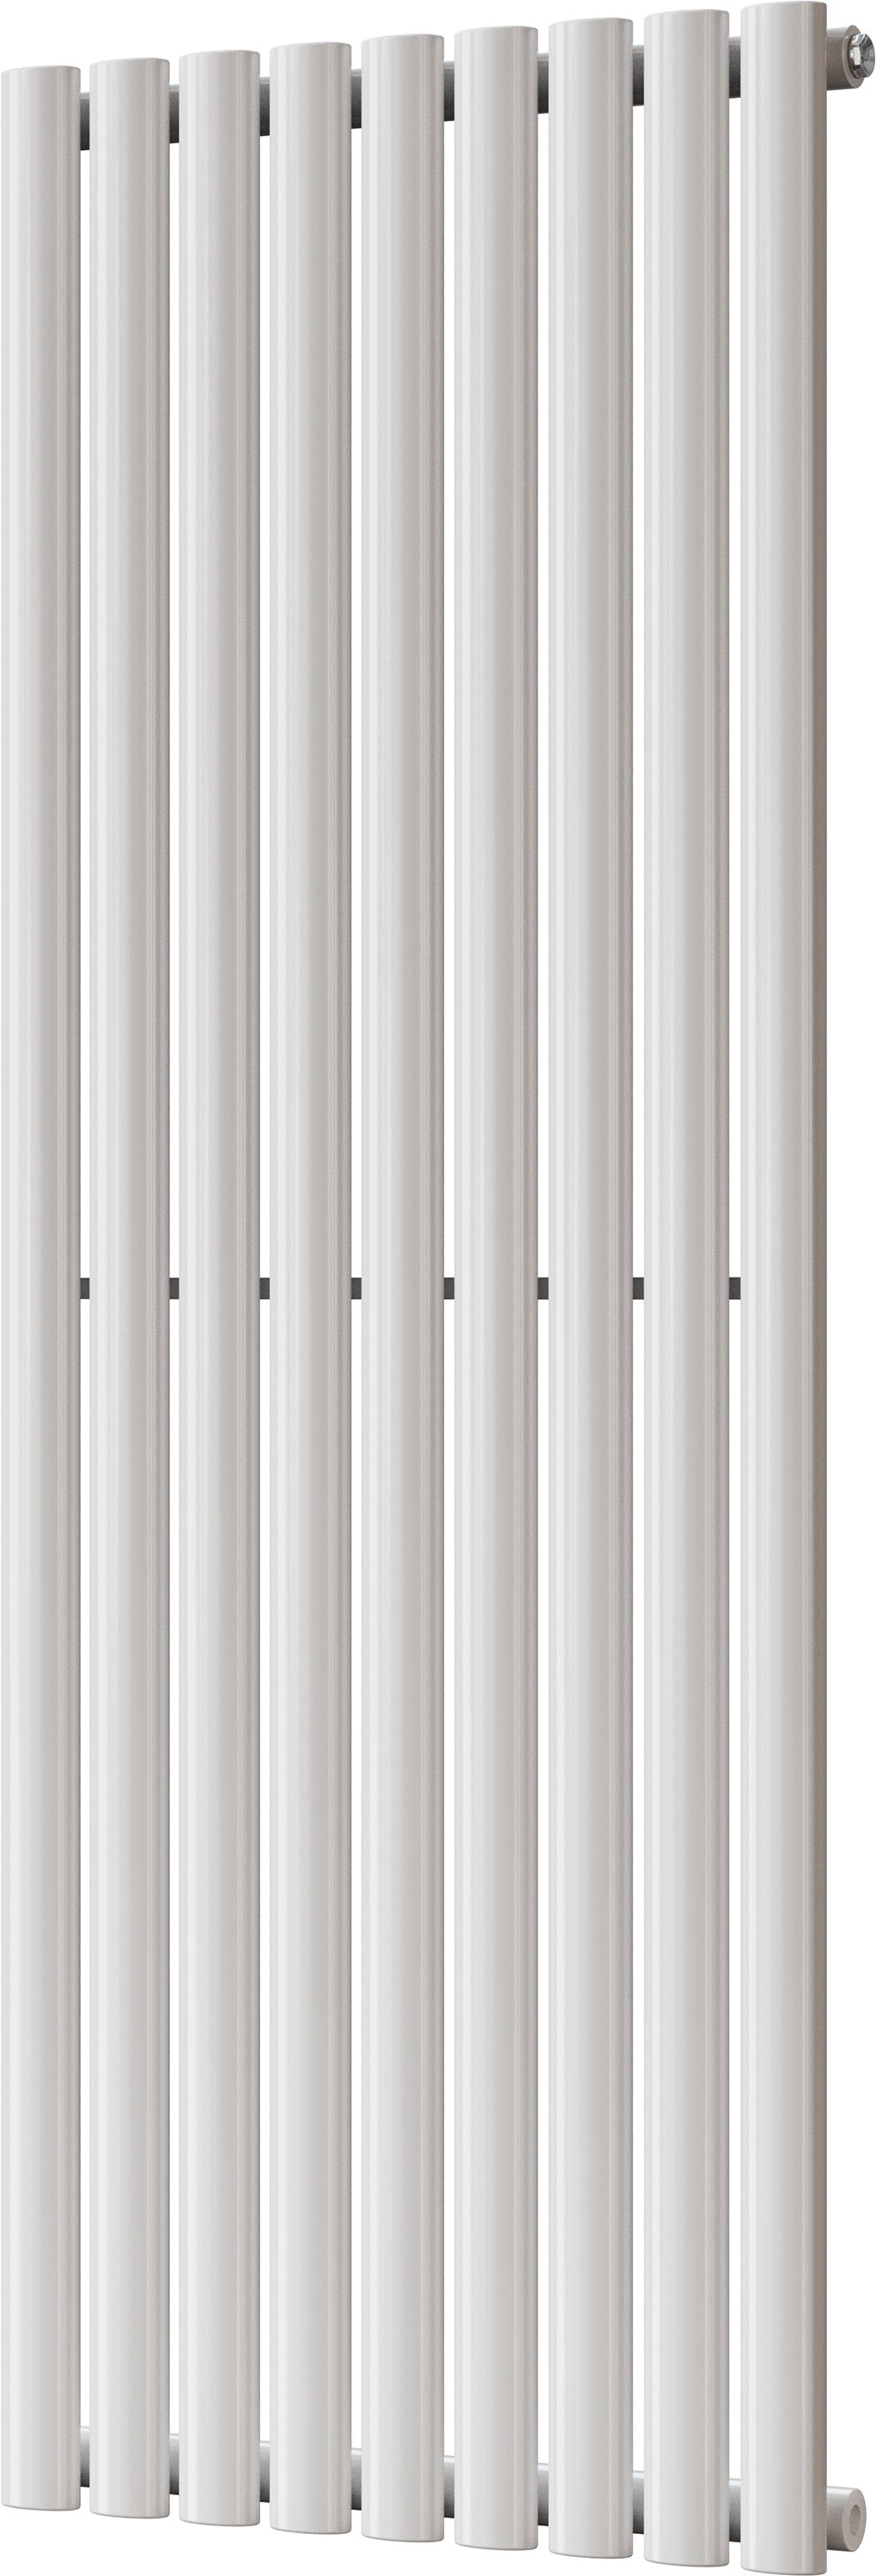 Omeara - White Vertical Radiator H1400mm x W522mm Single Panel